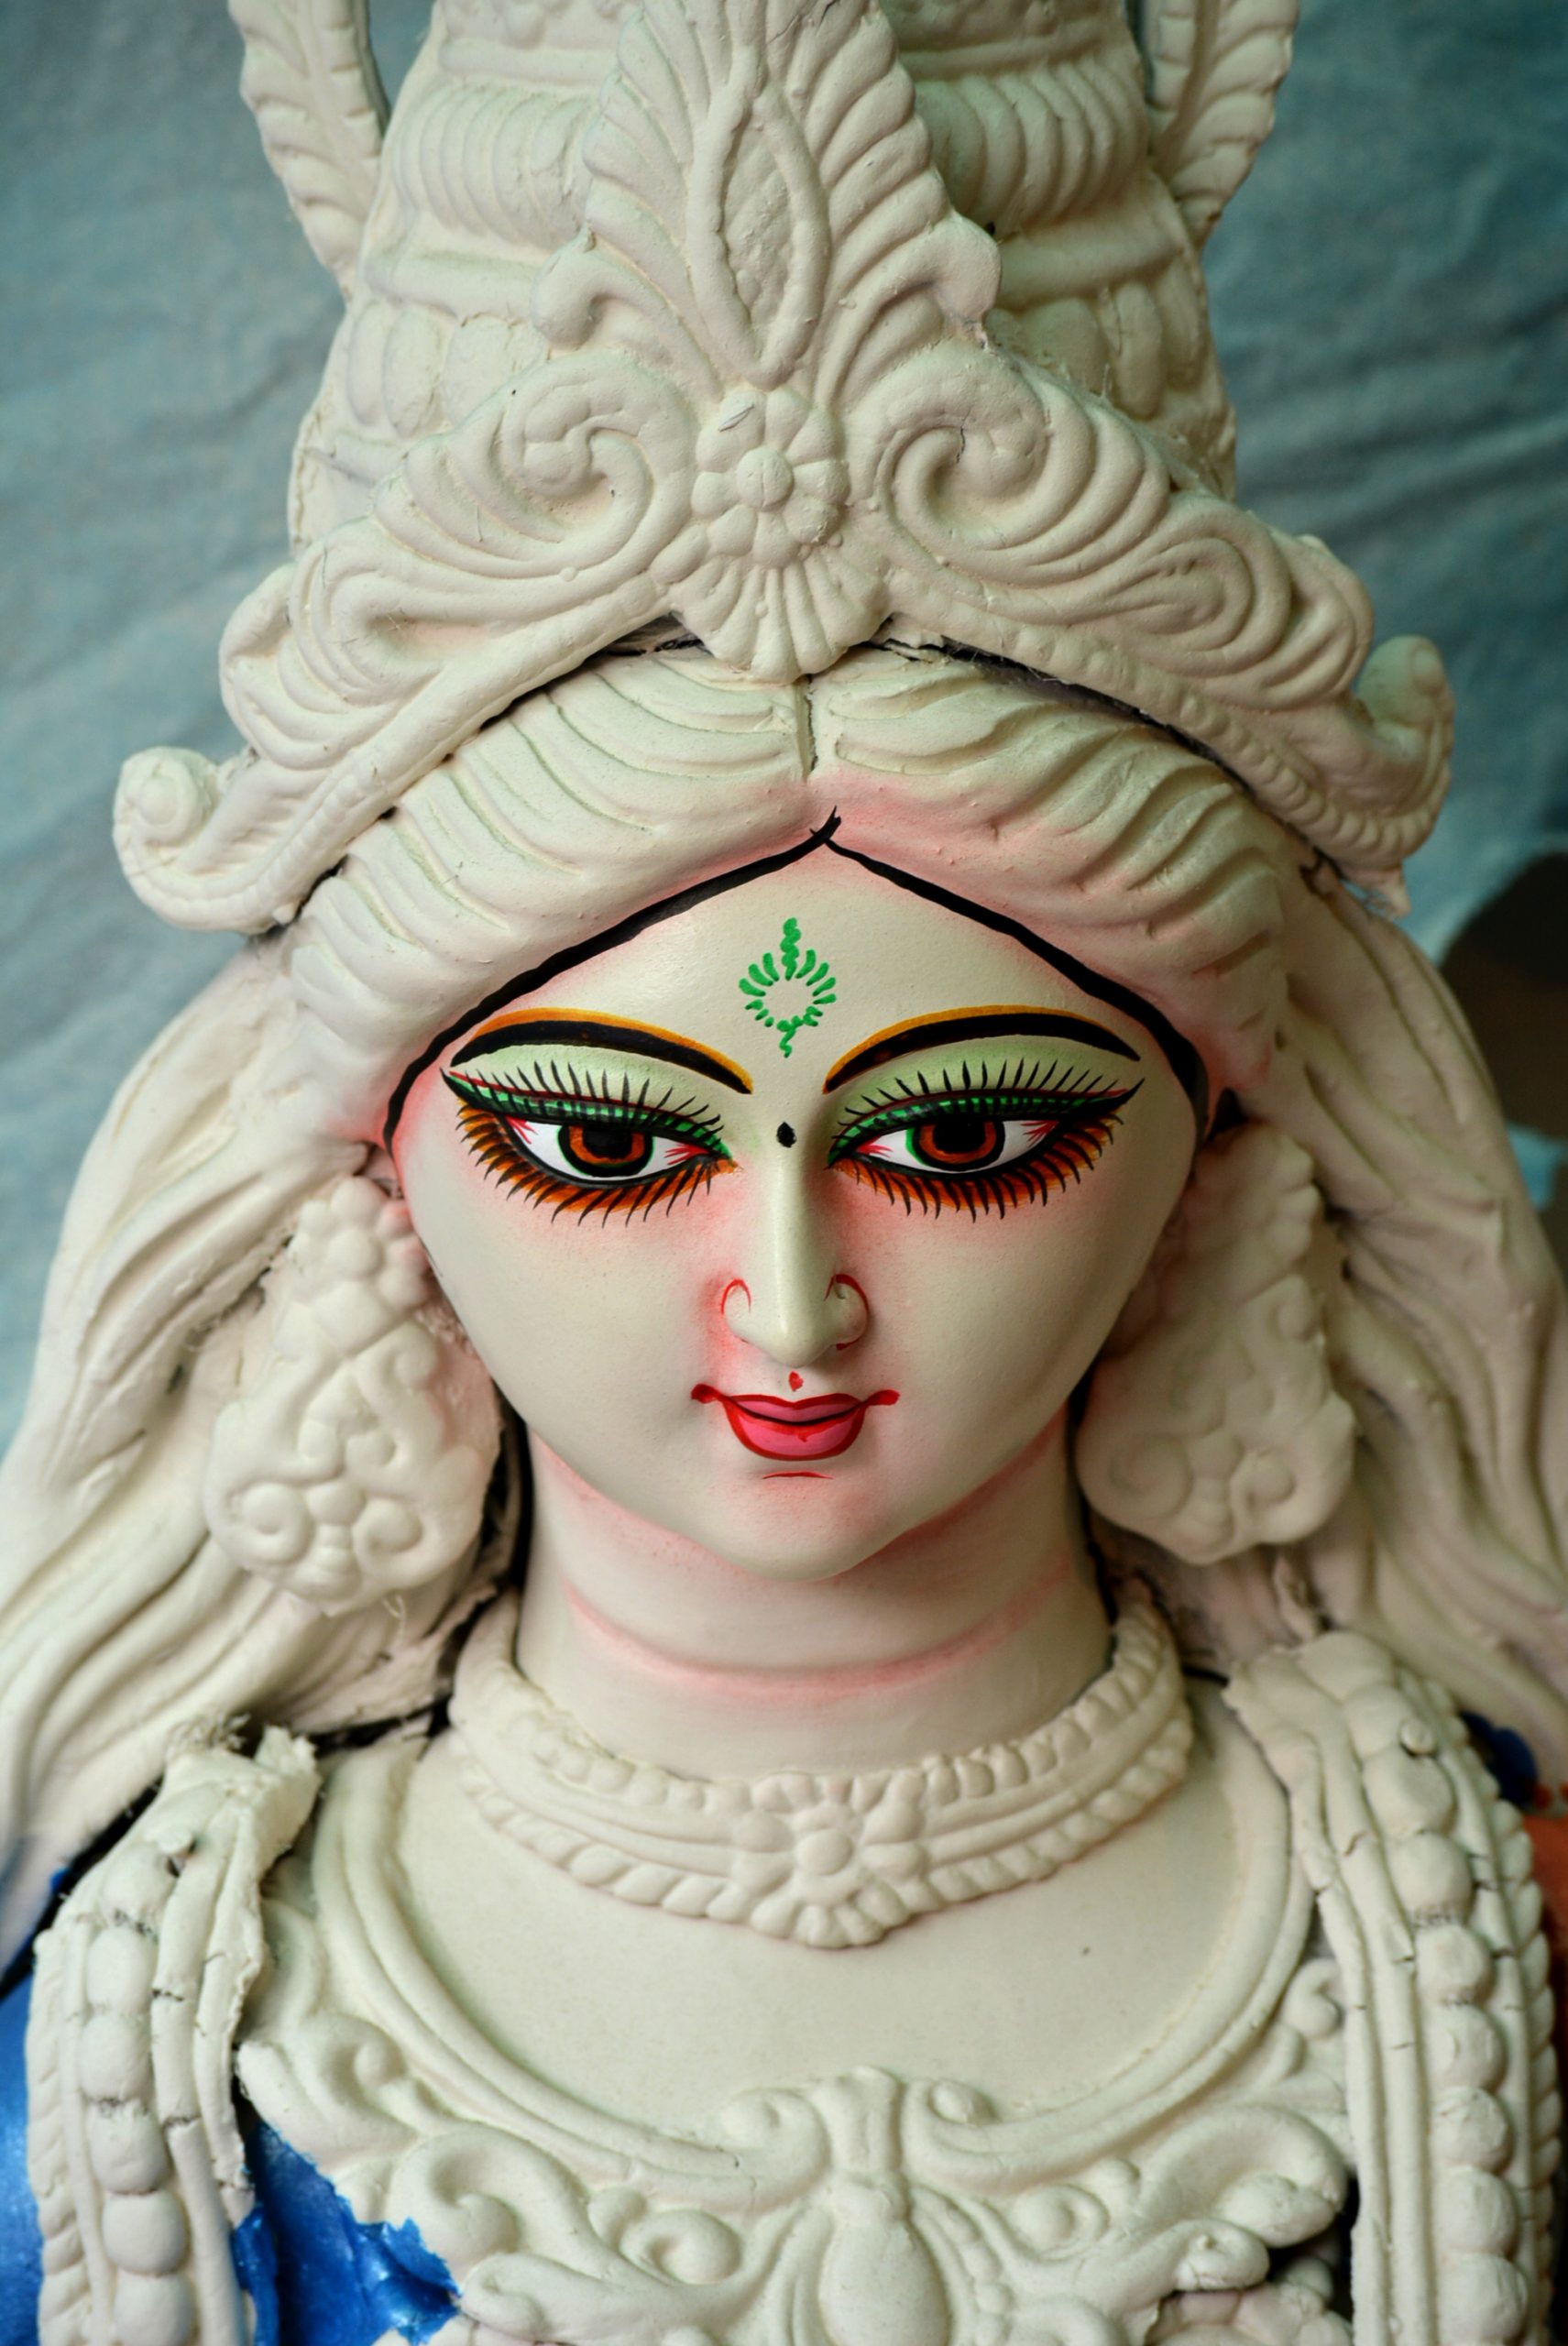 Idol of Goddess Durga